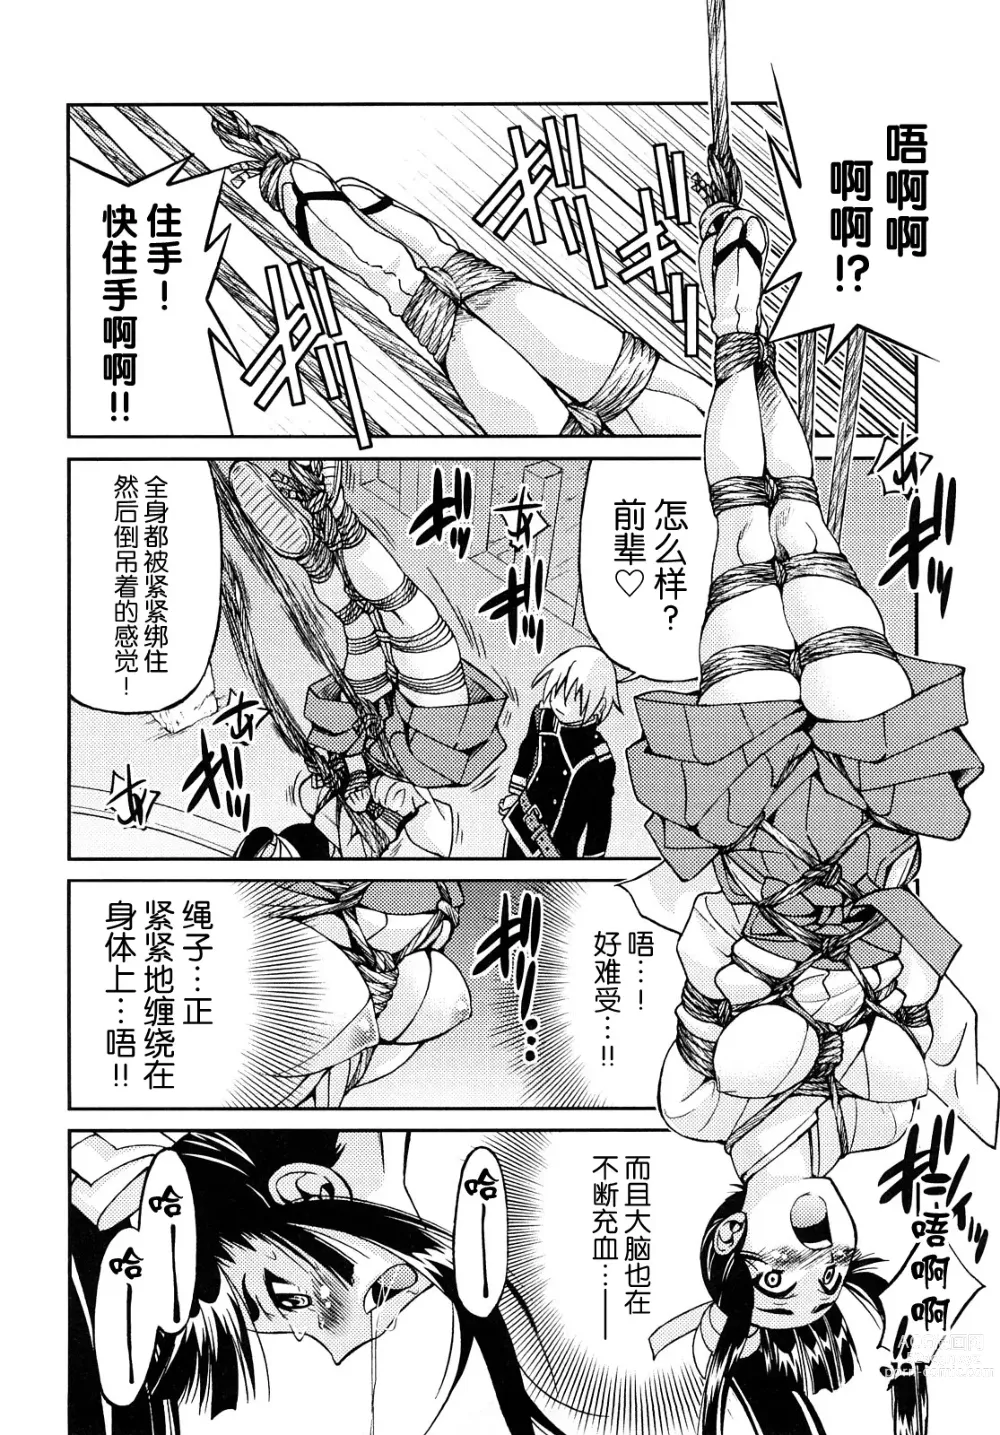 Page 189 of manga Shibarare Hime